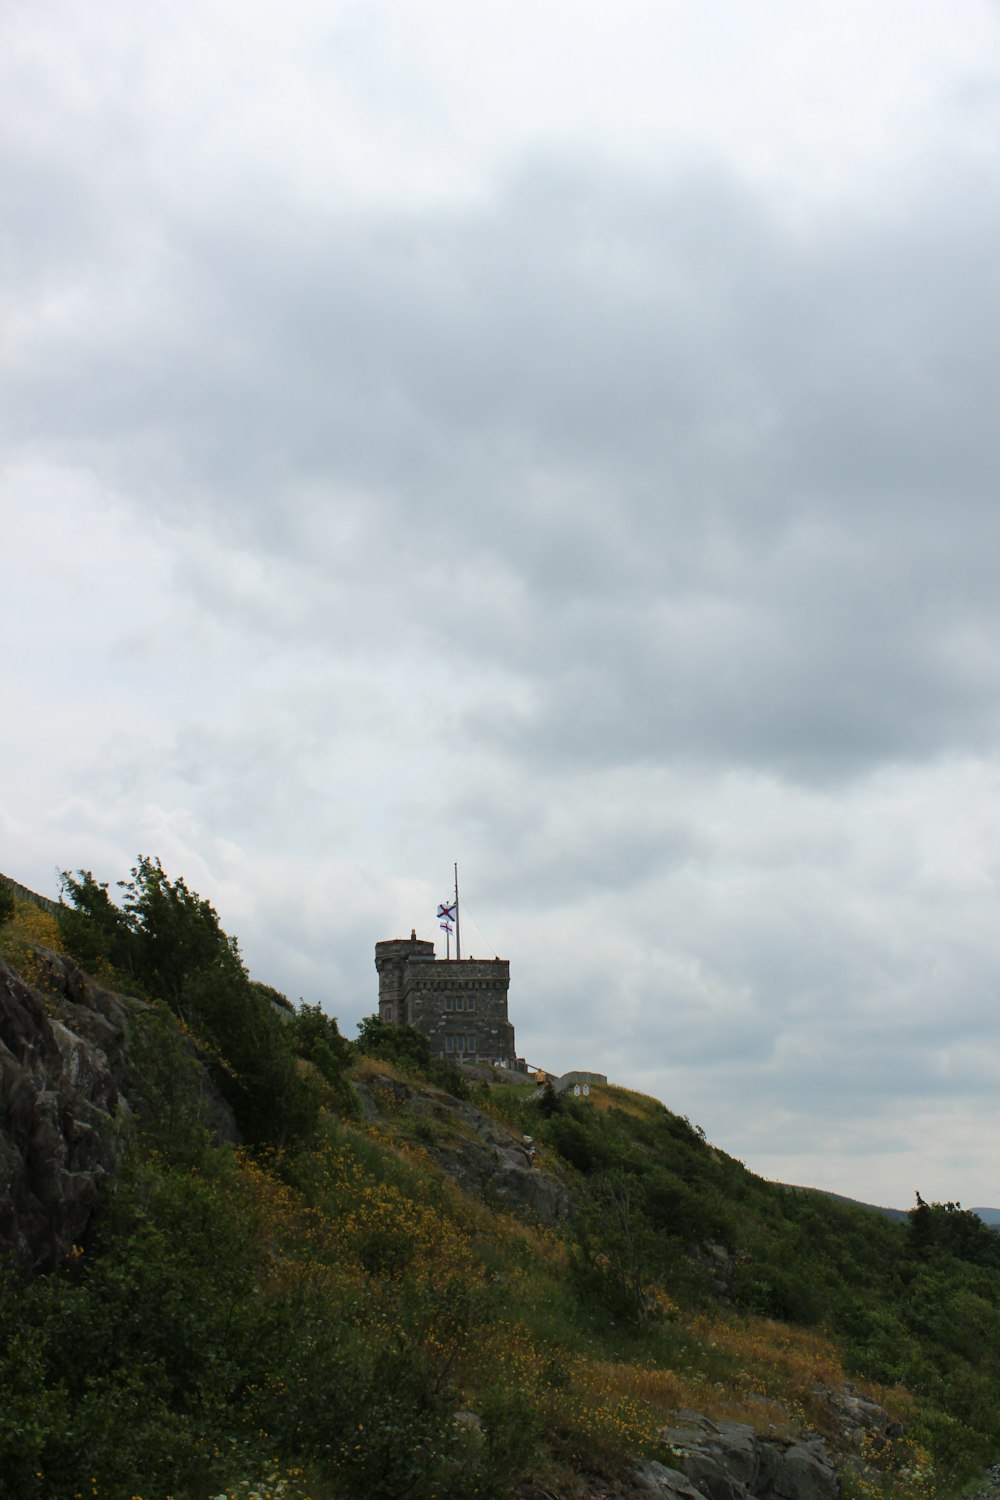 Una torre su una collina con una bandiera in cima